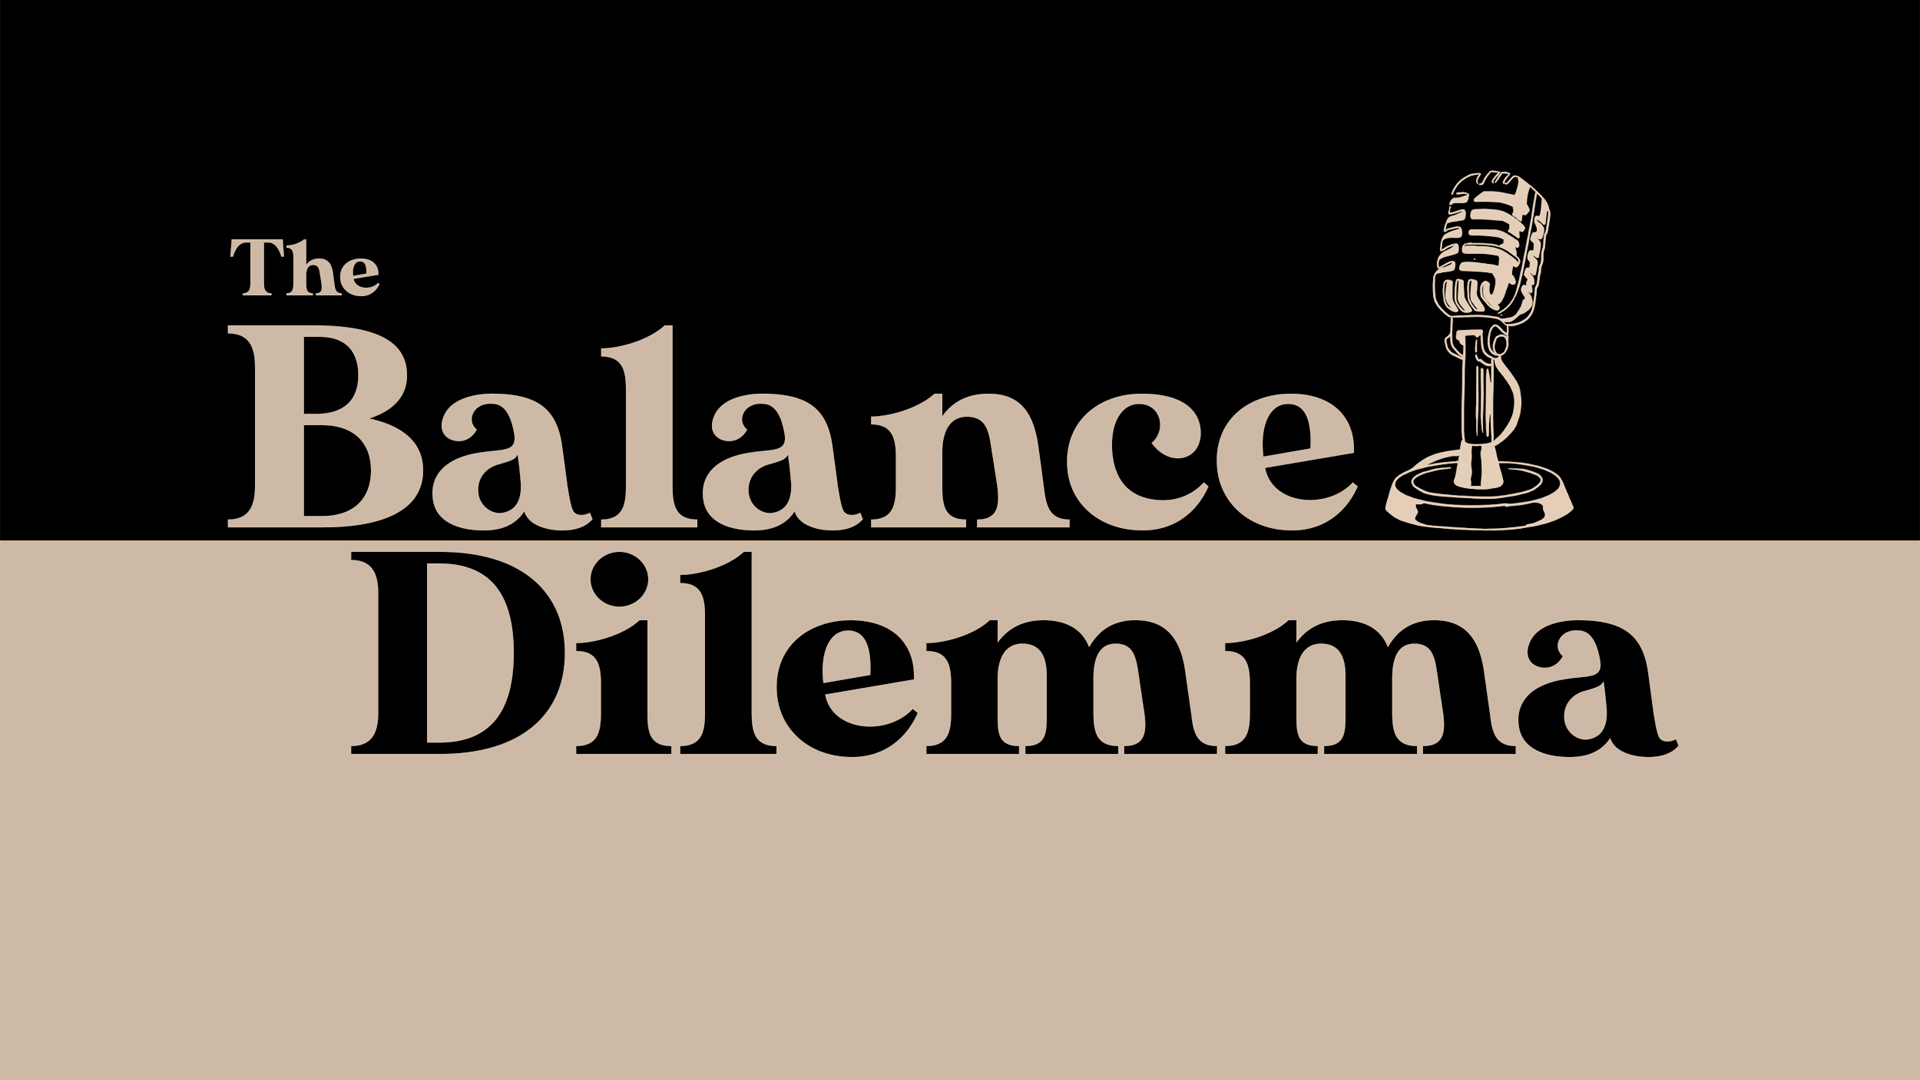 The Balance Dilemma